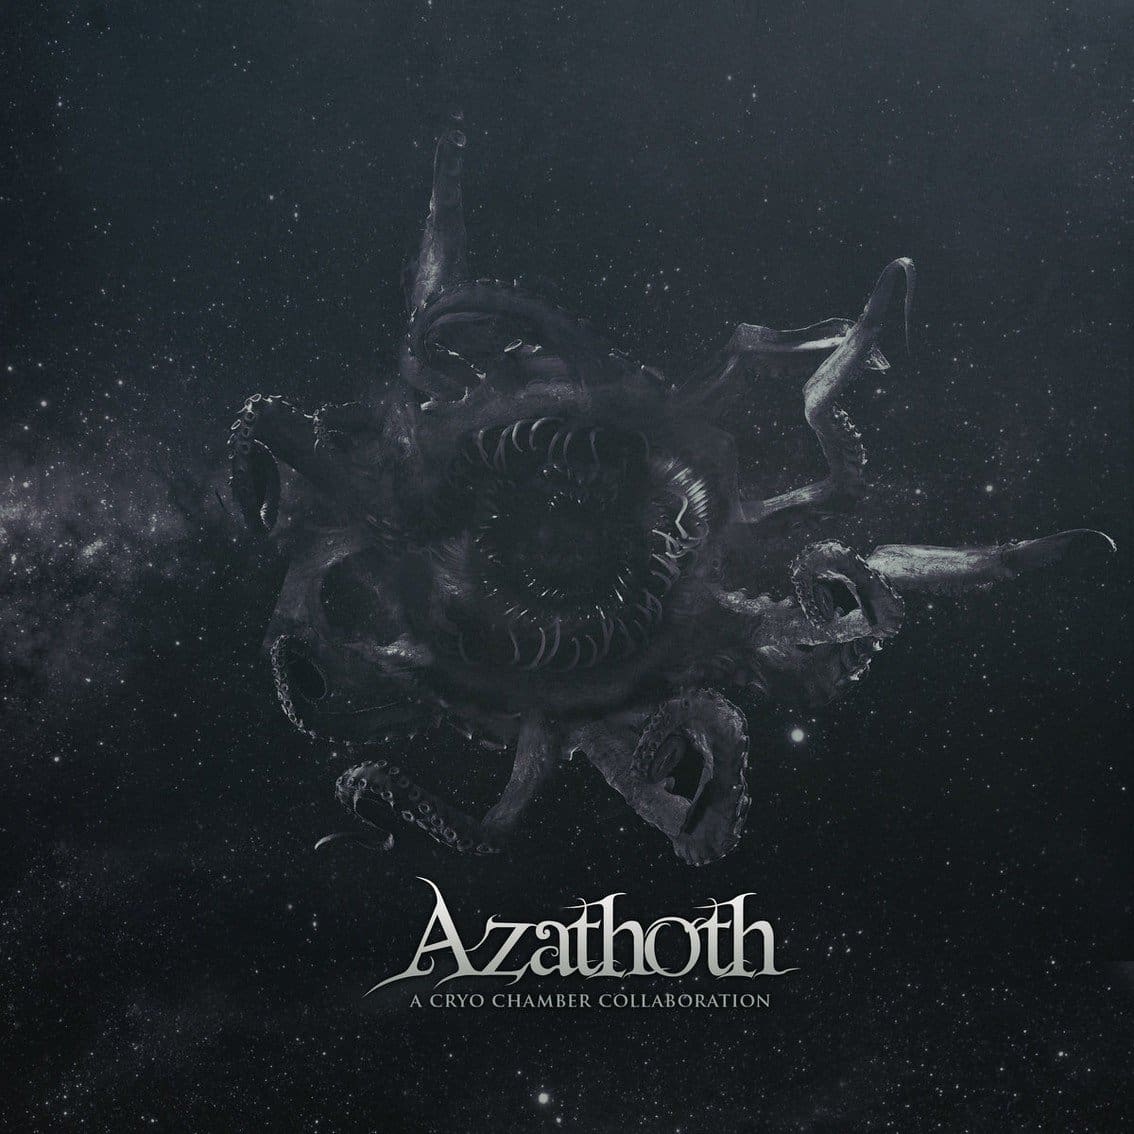 Cryo Chambers' 2 CD behemoth collaboration 'Azathoth' is out now